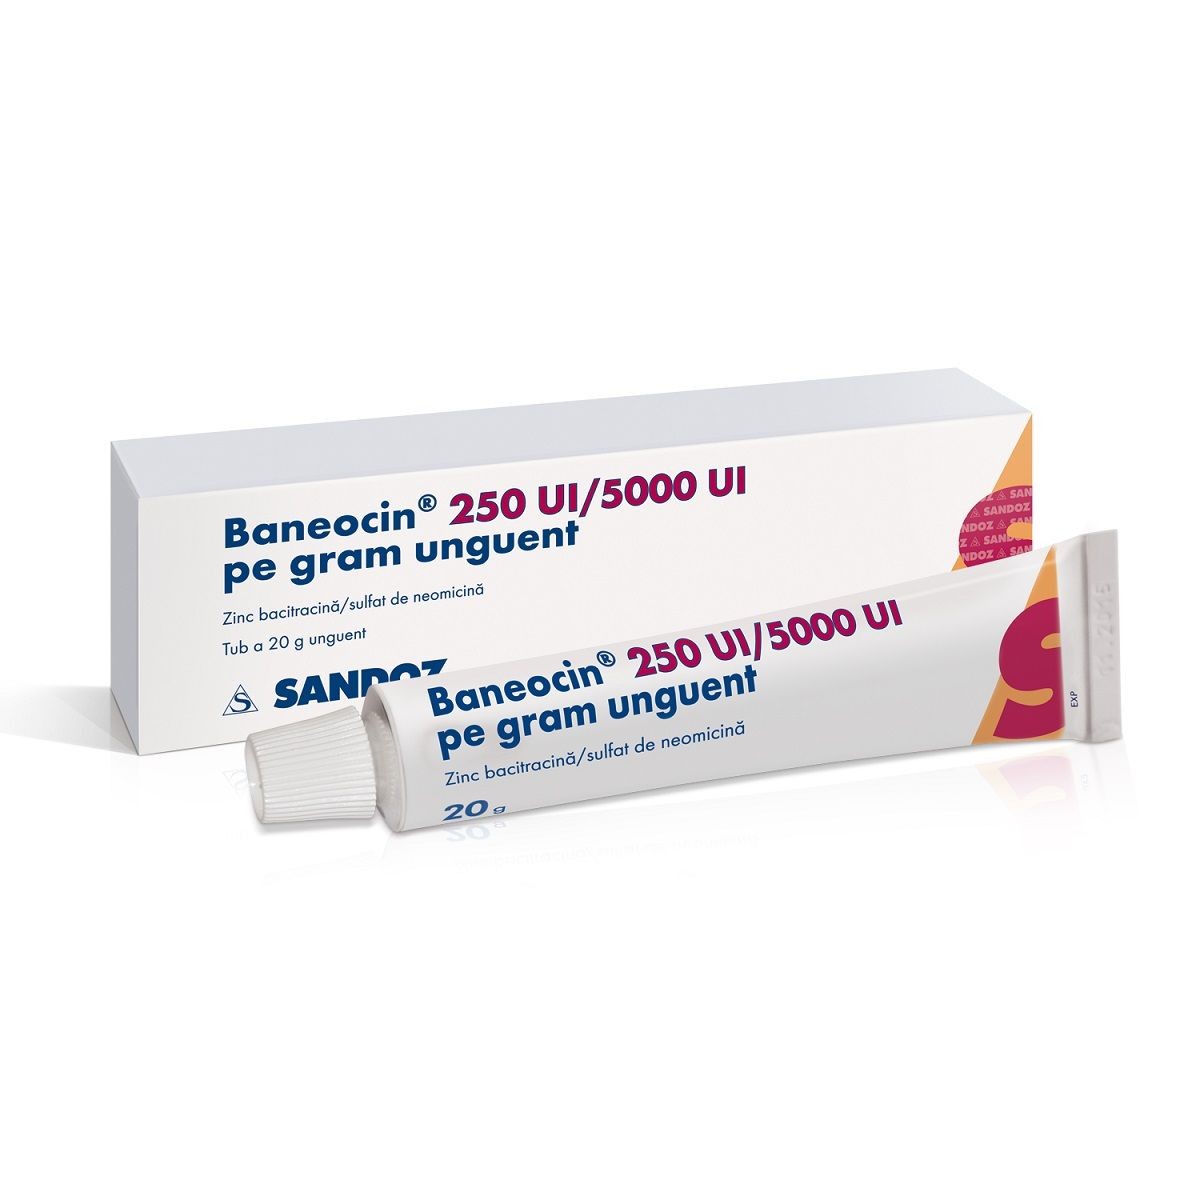 Cicatrizante - Baneocin unguent, 20 g, Sandoz, farmaciamare.ro